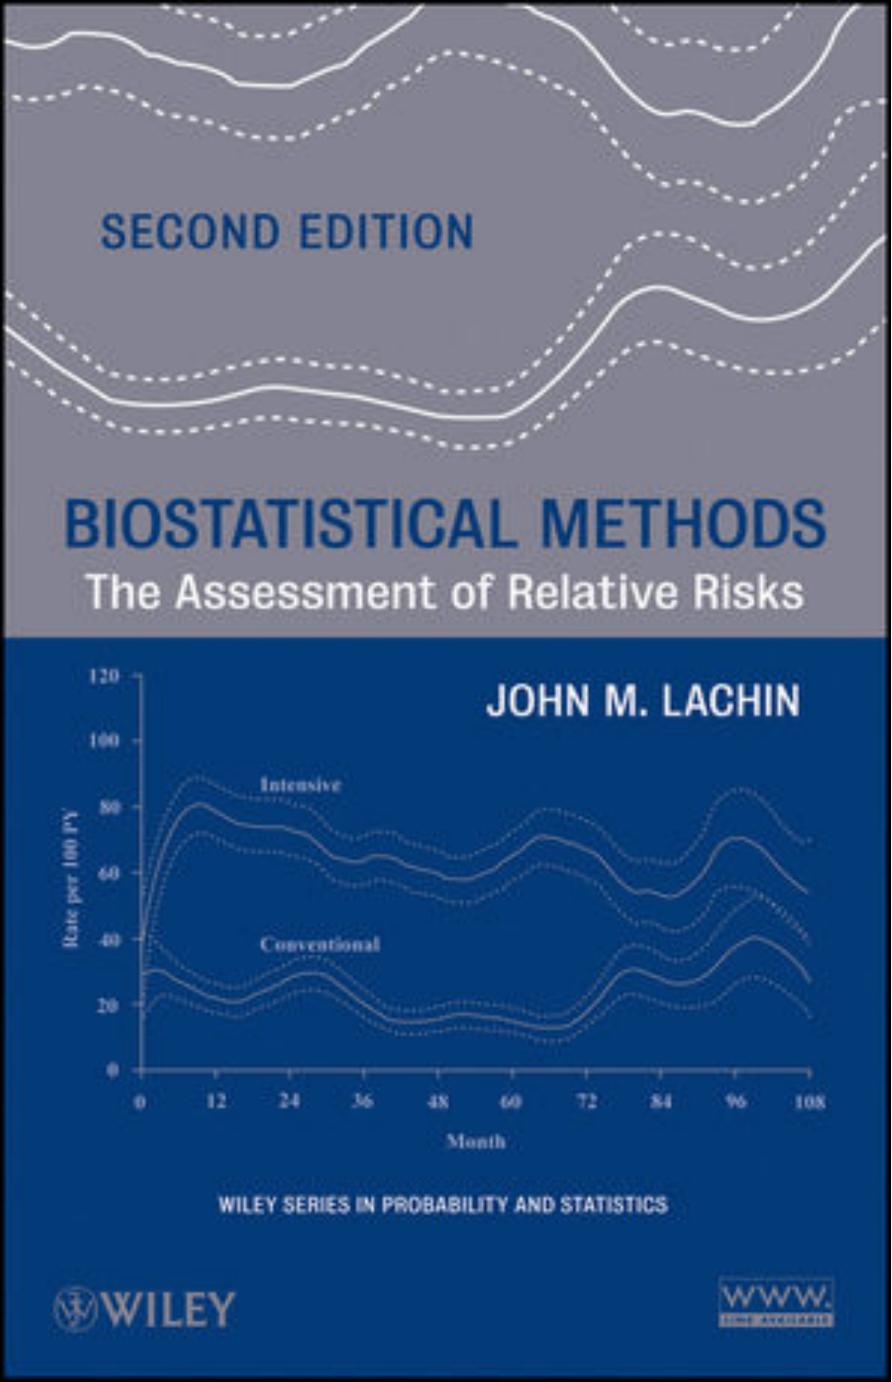 Biostatistical Methods